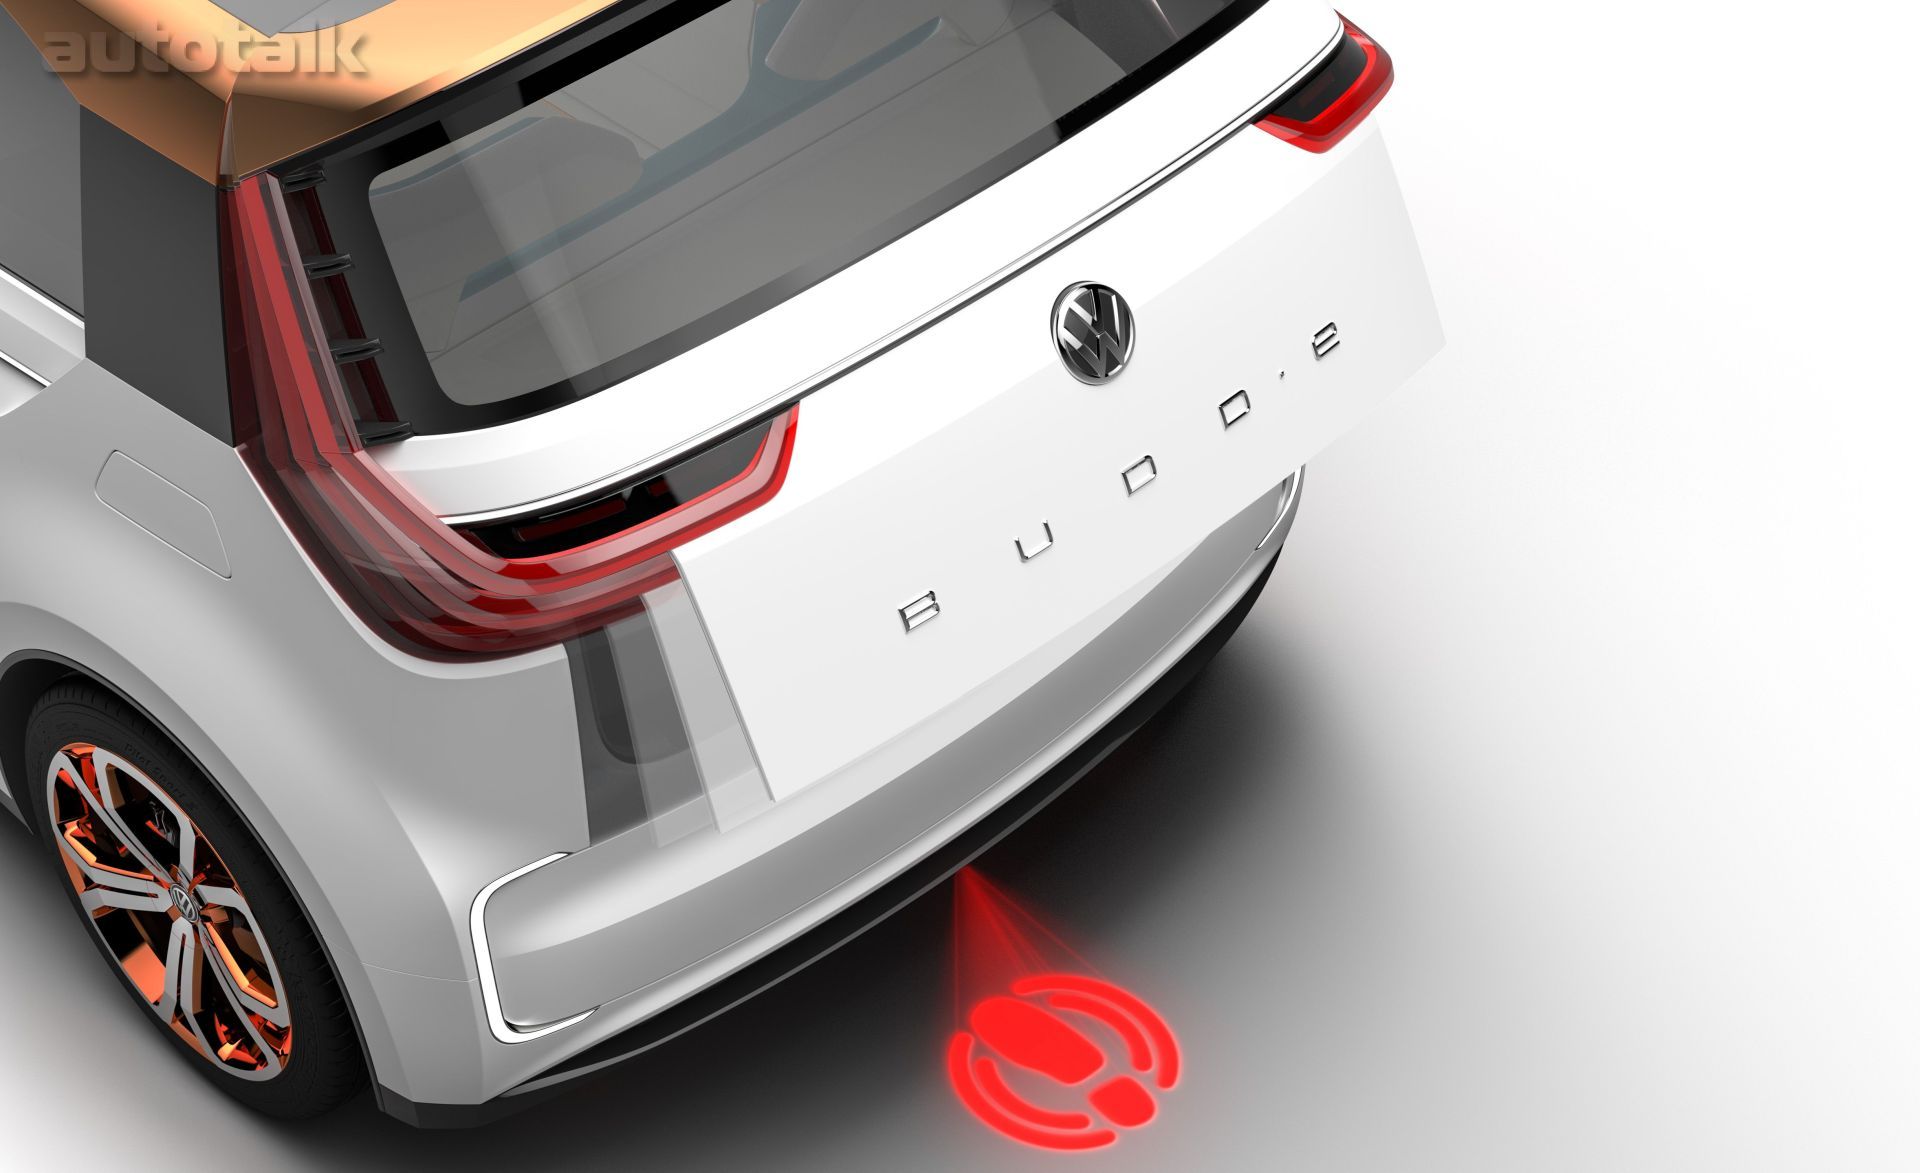 CES 2016: Electric Volkswagen Budd-e Concept Microbus